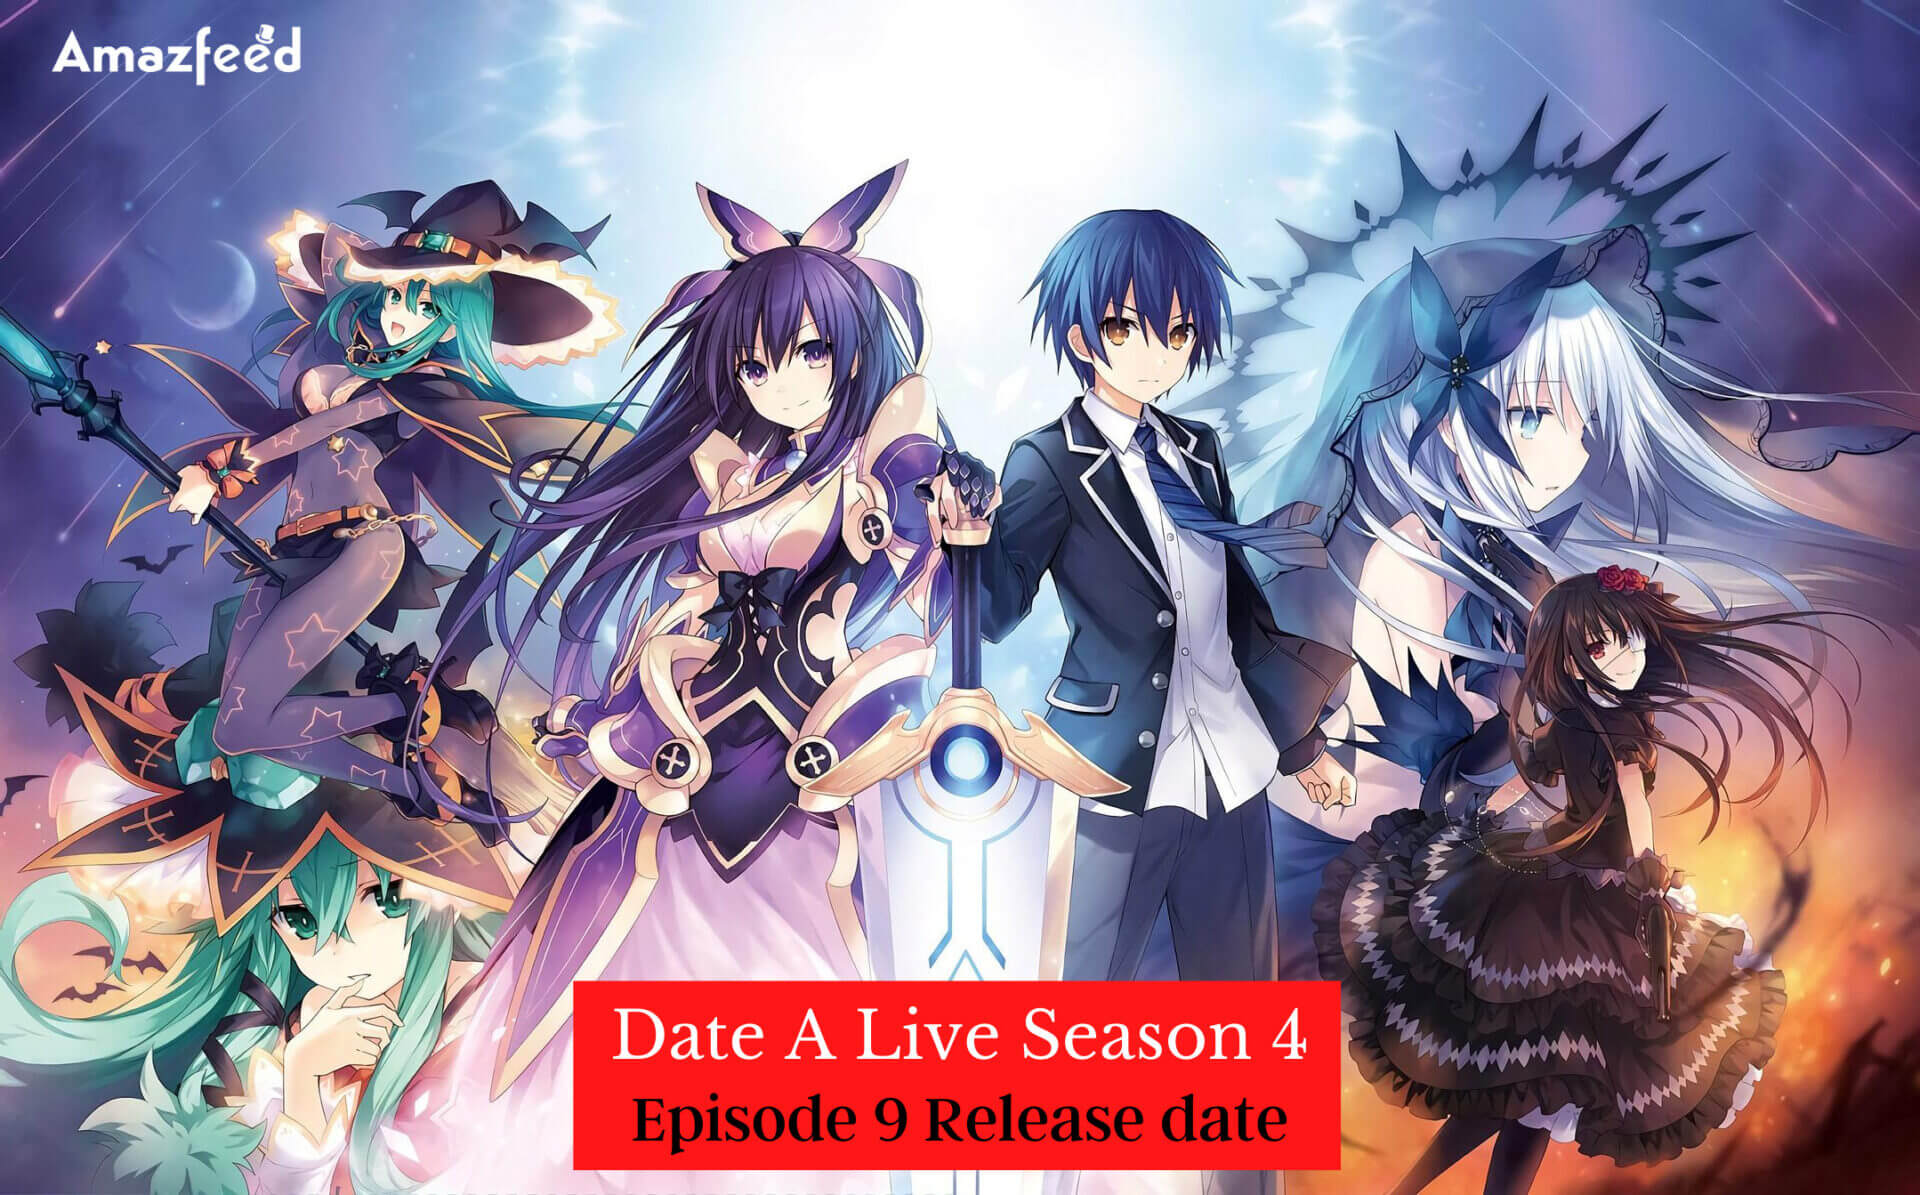 Date A Live Season 4 episode 9 release date